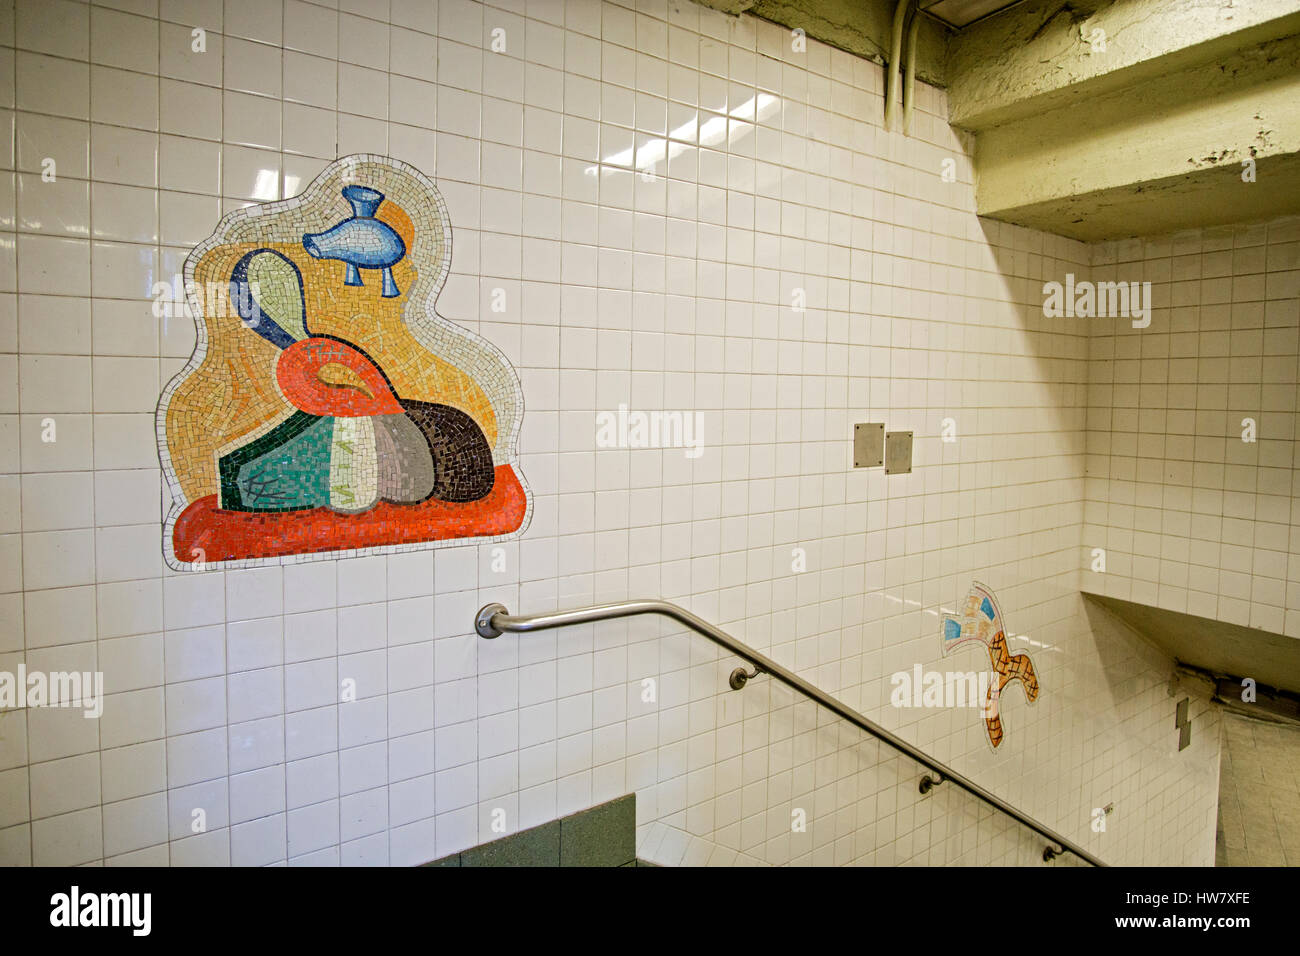 La metropolitana di arte presso l'entrata di thef28th Street station di i n linea metropolitana in Herlad a sezione quadrata di Manhattan, New York City. Foto Stock